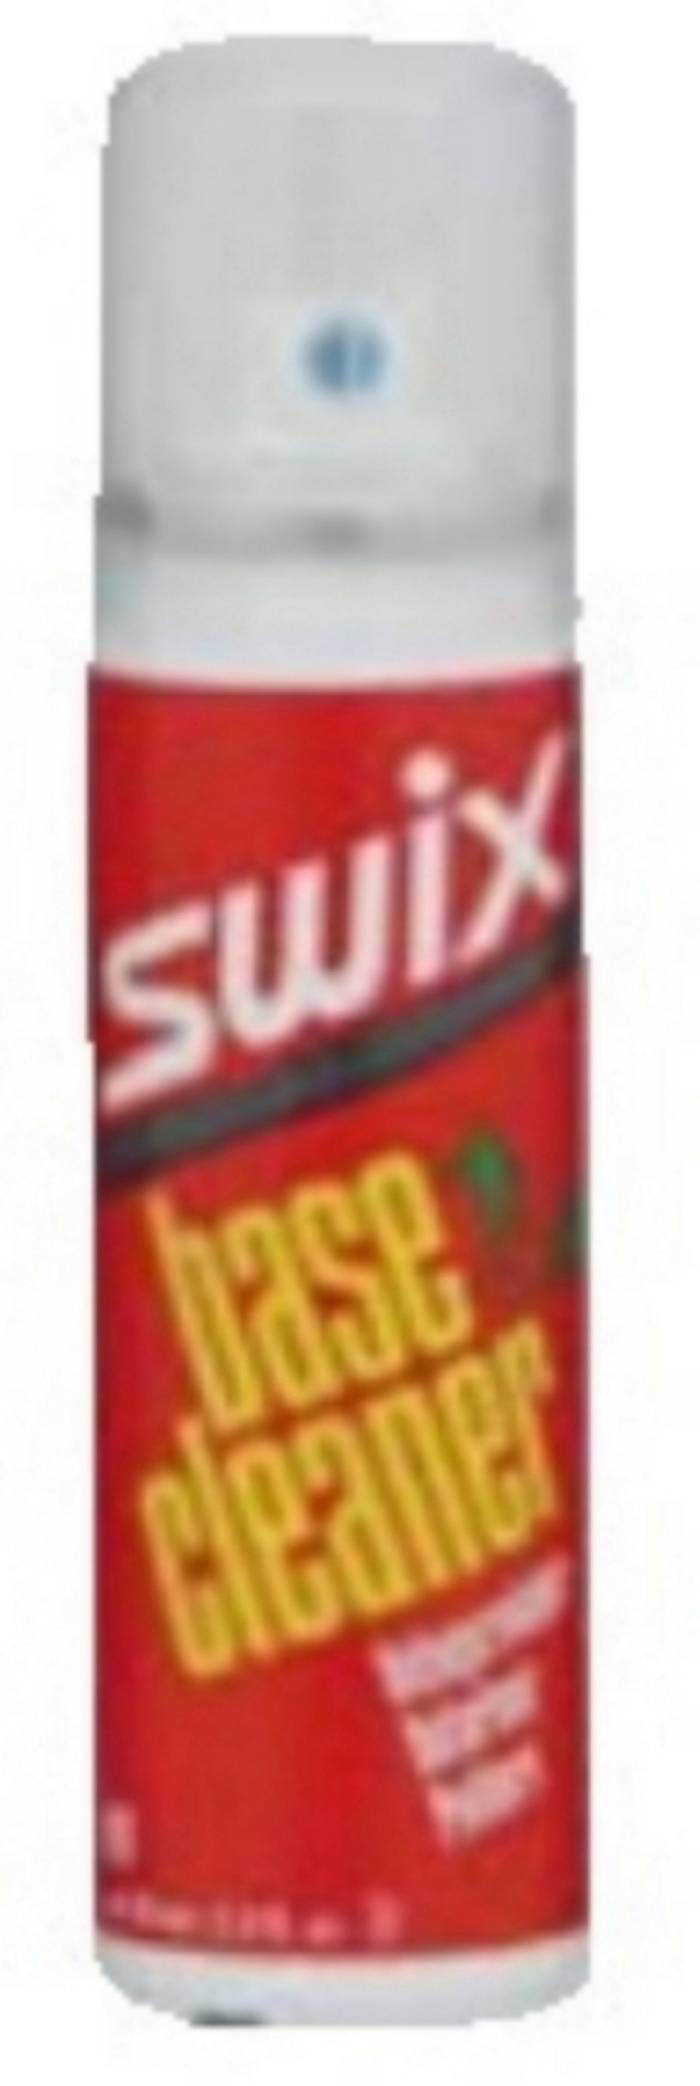 Swix I61 смывка-аэрозоль 